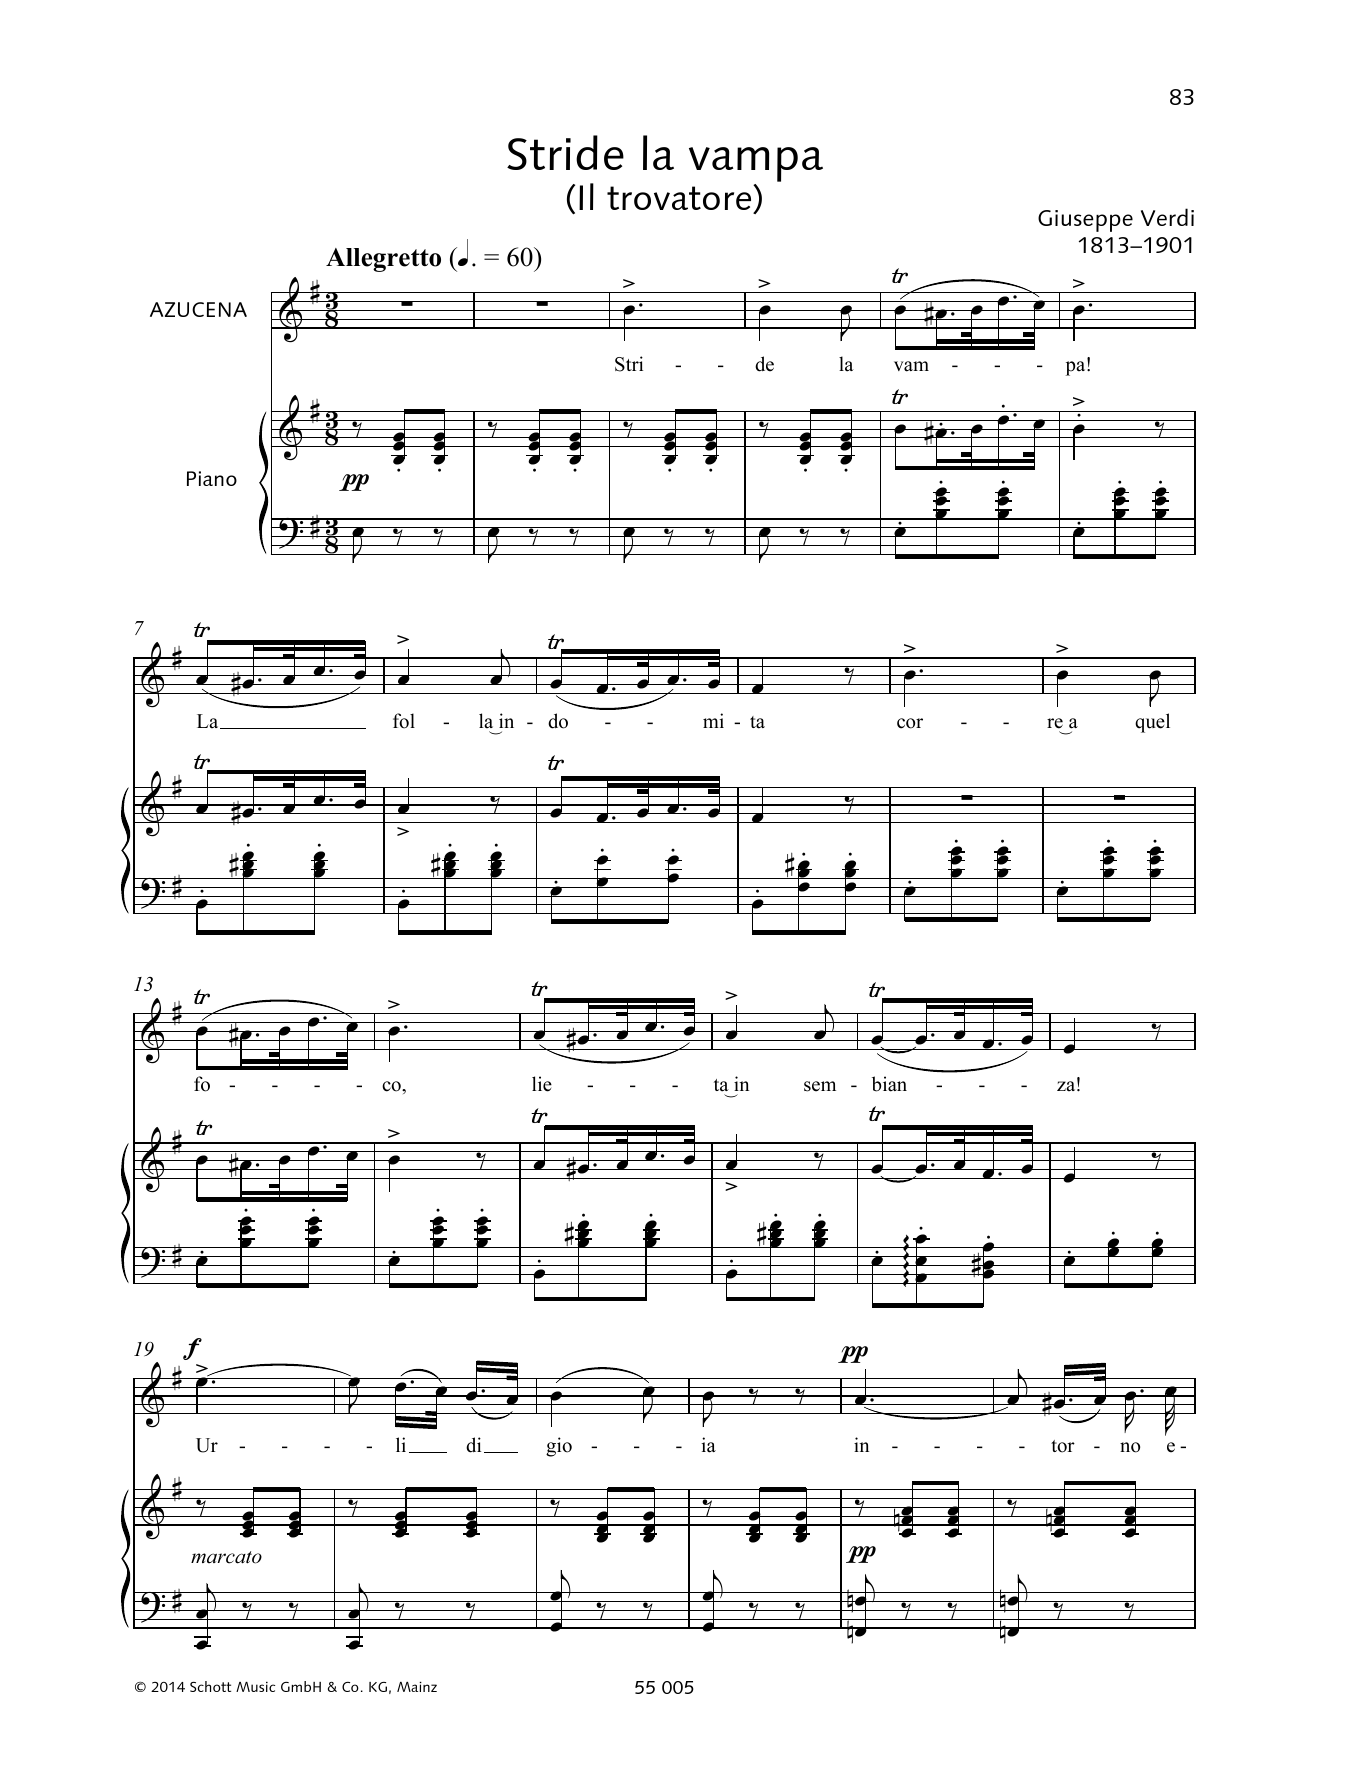 Download Giuseppe Verdi Stride la vampa Sheet Music